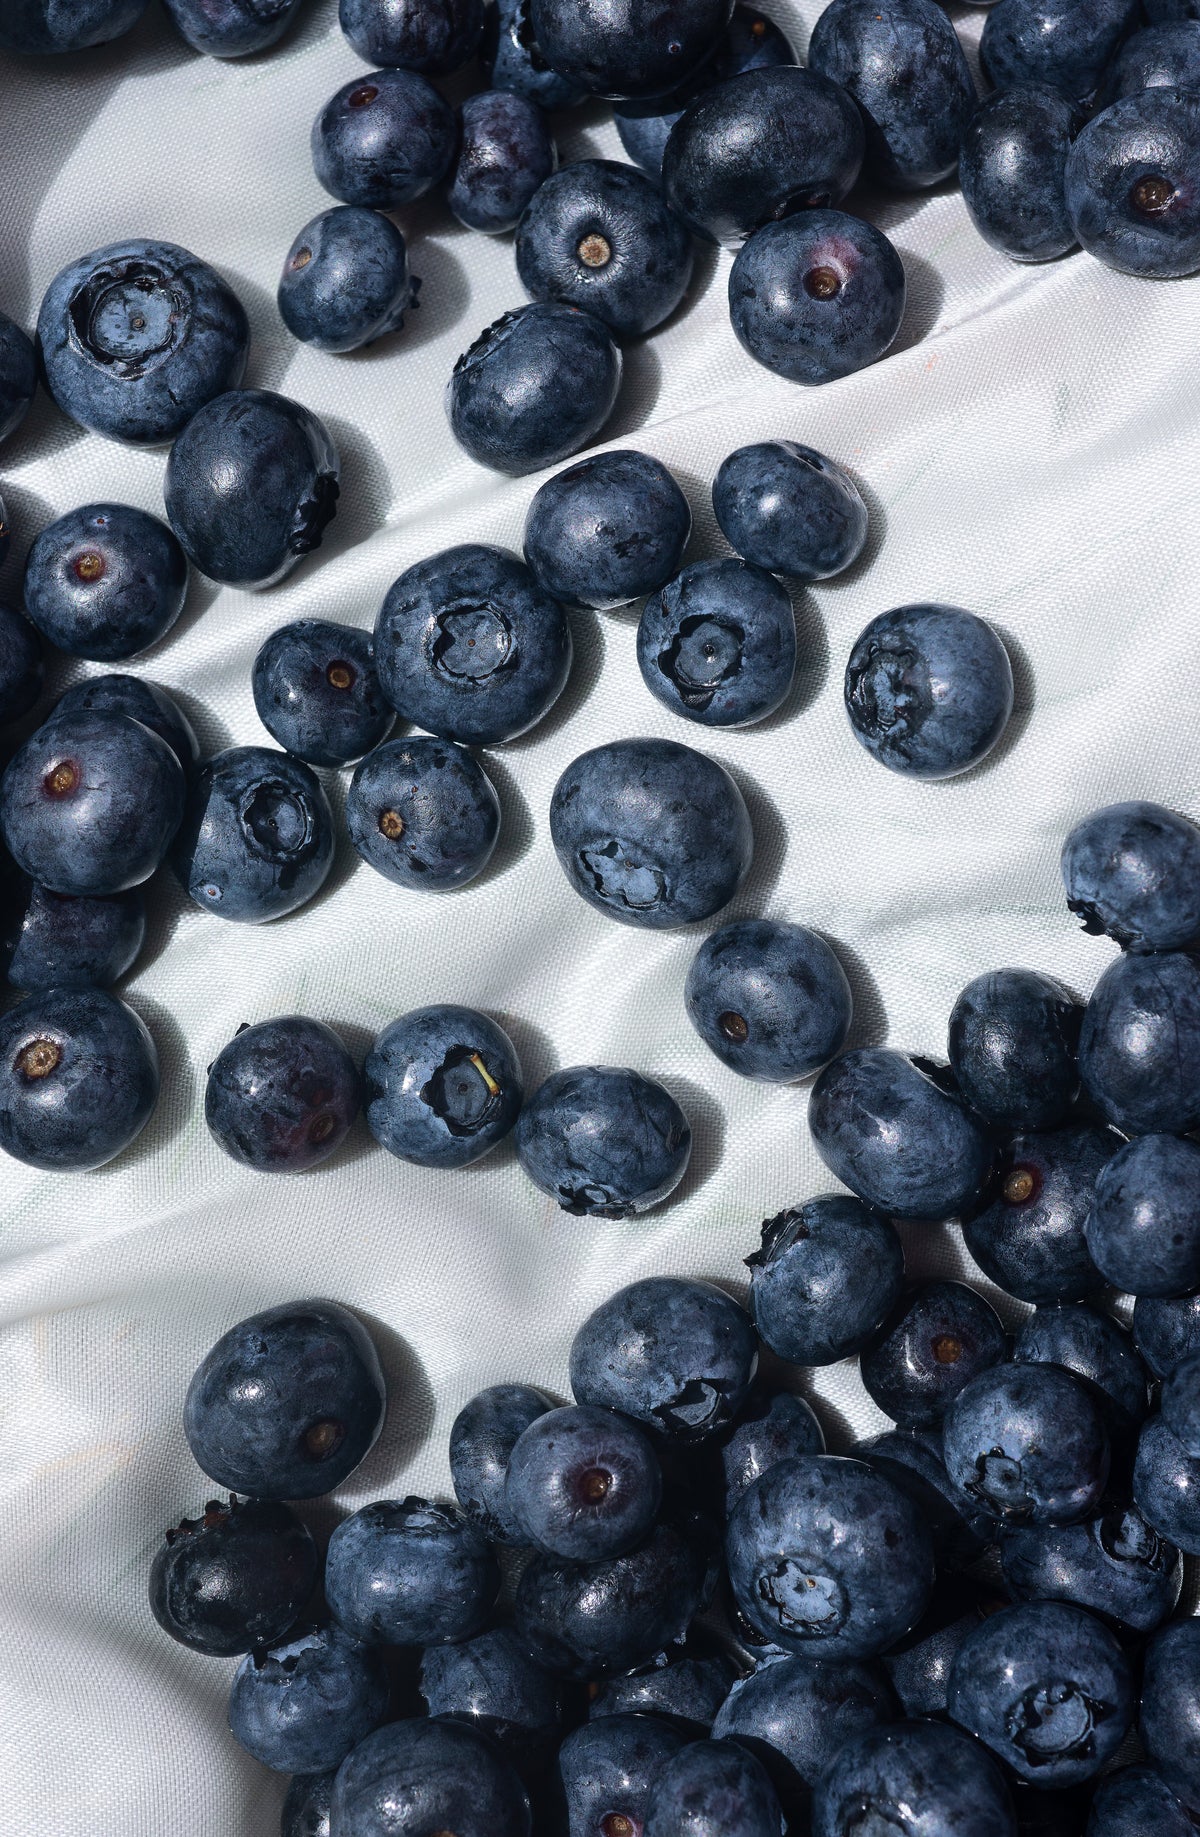 round ripe blueberries on white fabric